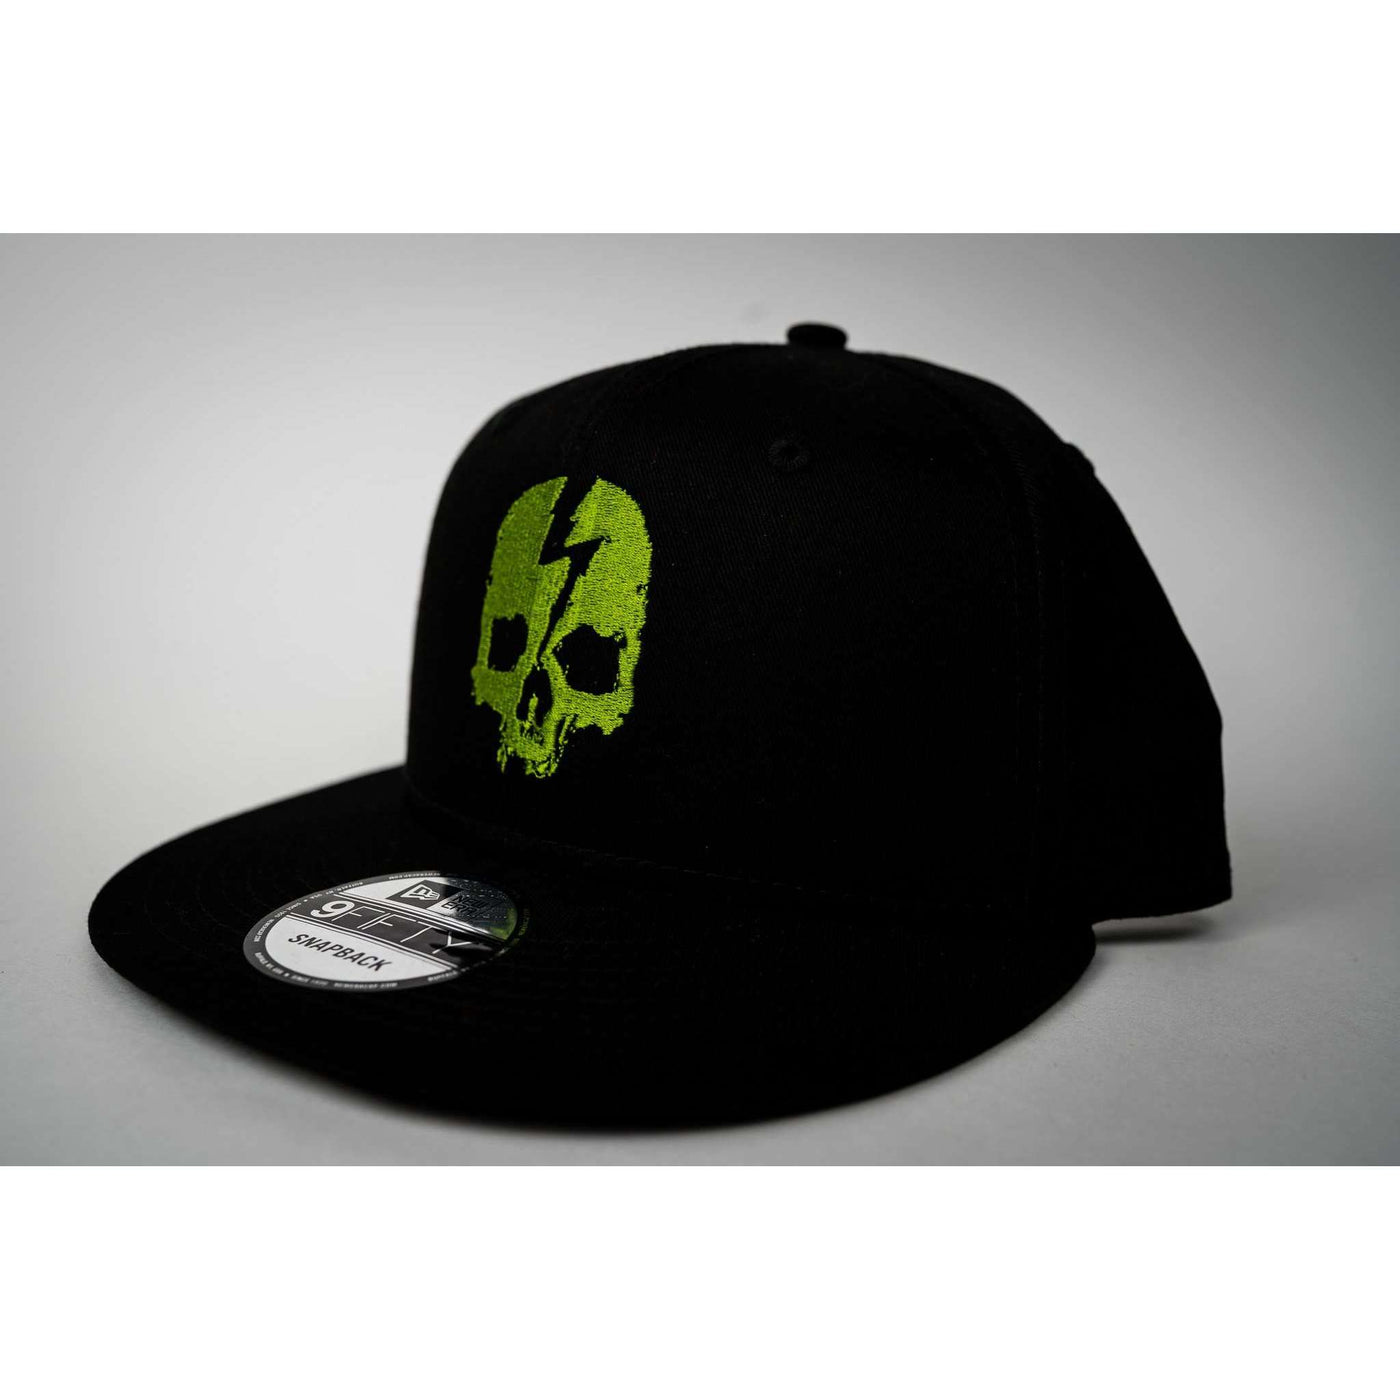 SWAMP GREEN SKULL LOGO HAT - Born Scum Clothing Co